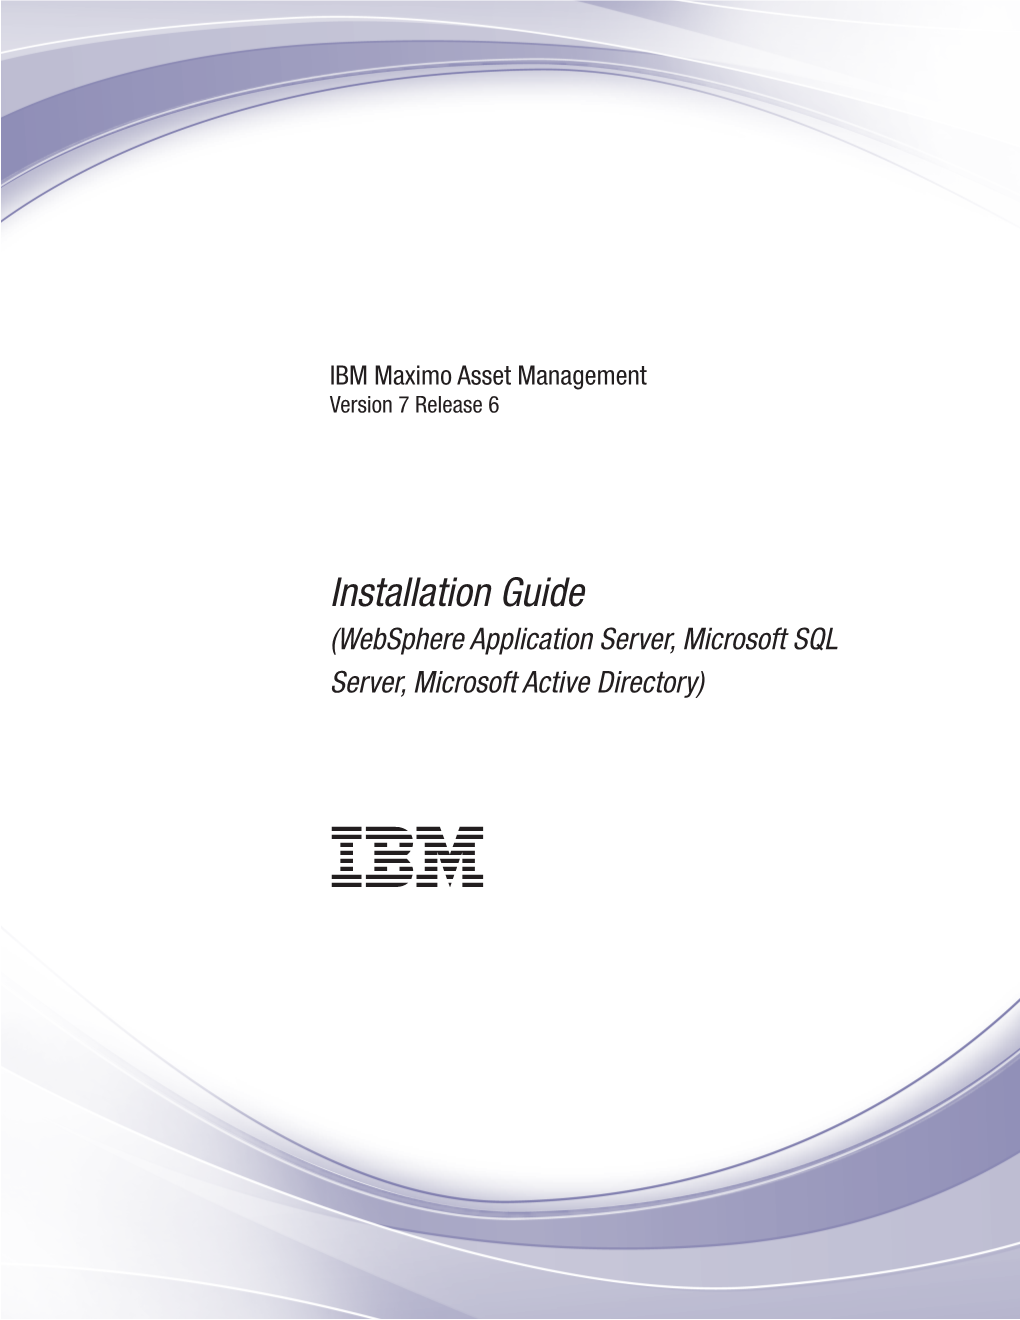 IBM Maximo Asset Management: Installation Guide (Websphere Application Server, SQL Server, Active Directory) Chapter 1